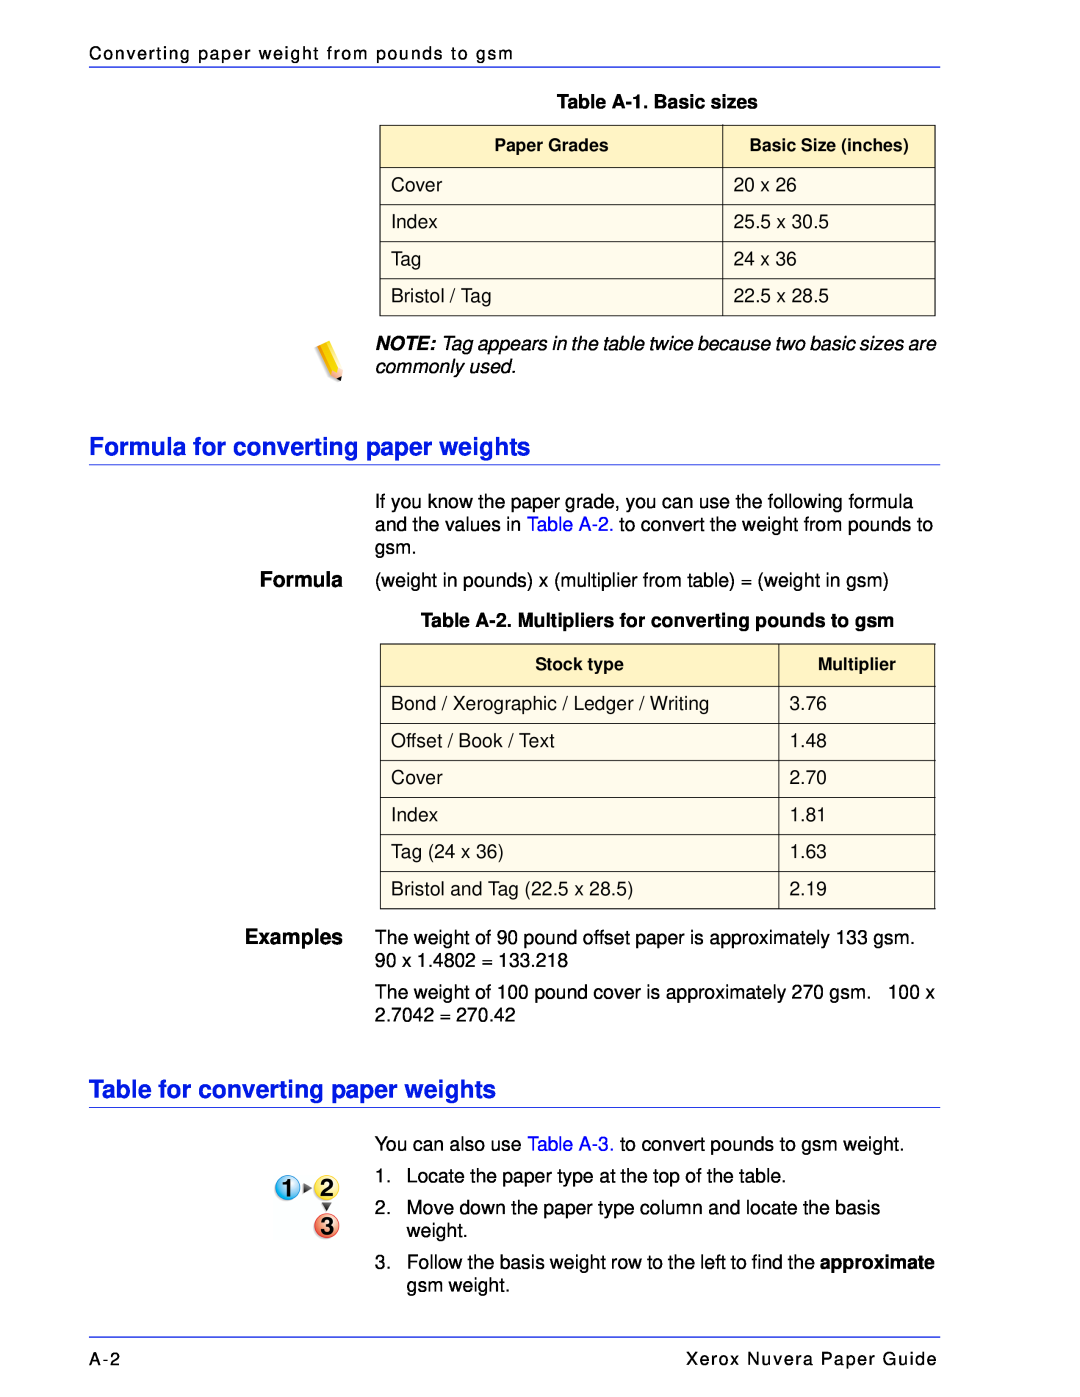 Xerox 701P28020 manual Formula for converting paper weights, Table for converting paper weights, Table A-1. Basic sizes 